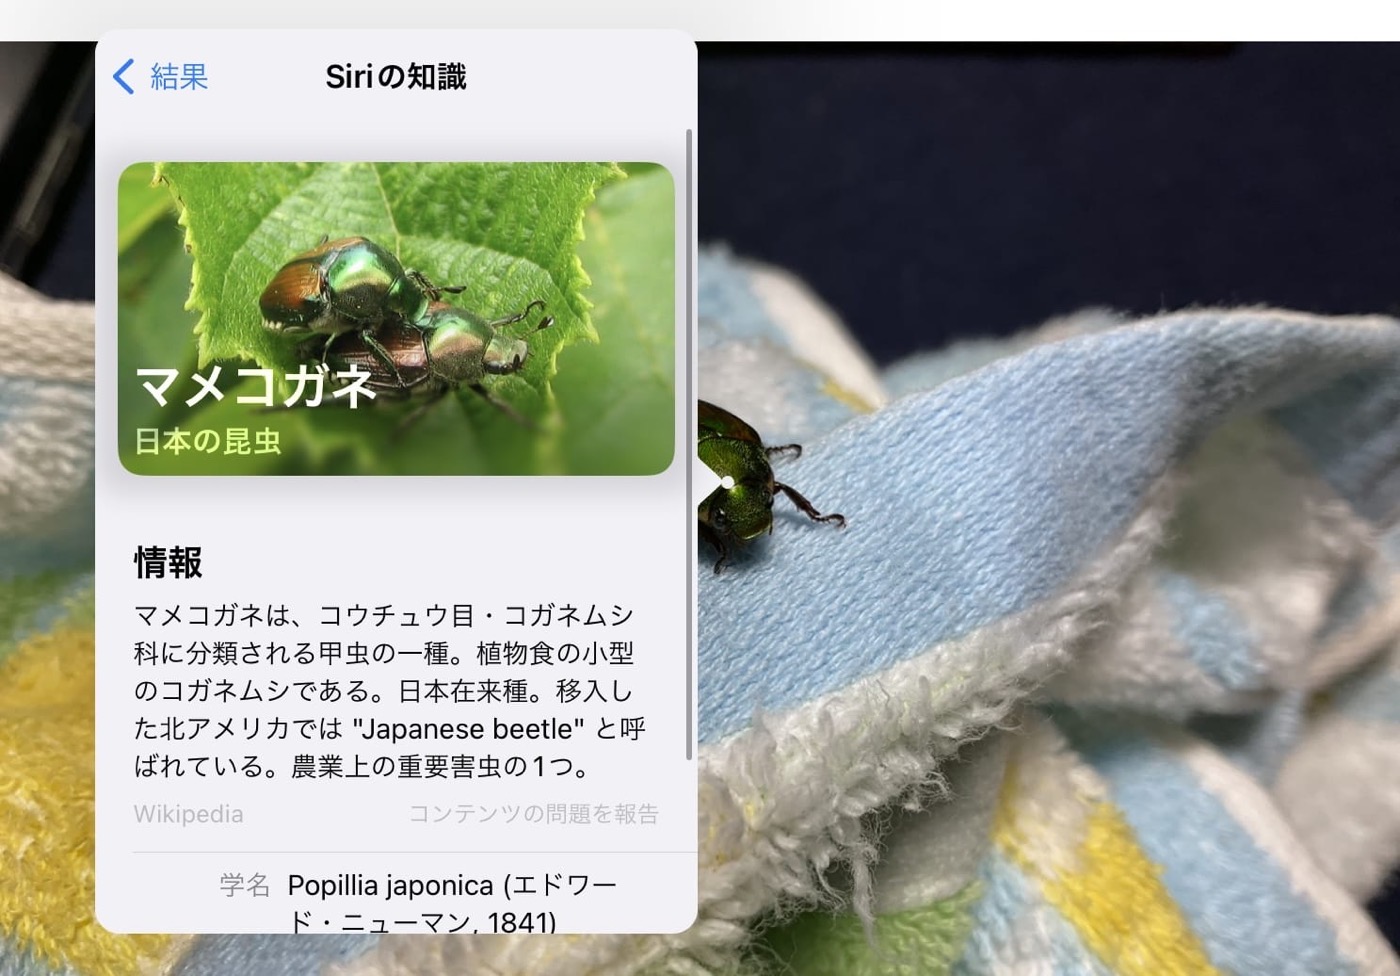 IOS iPadOS image recognition 01